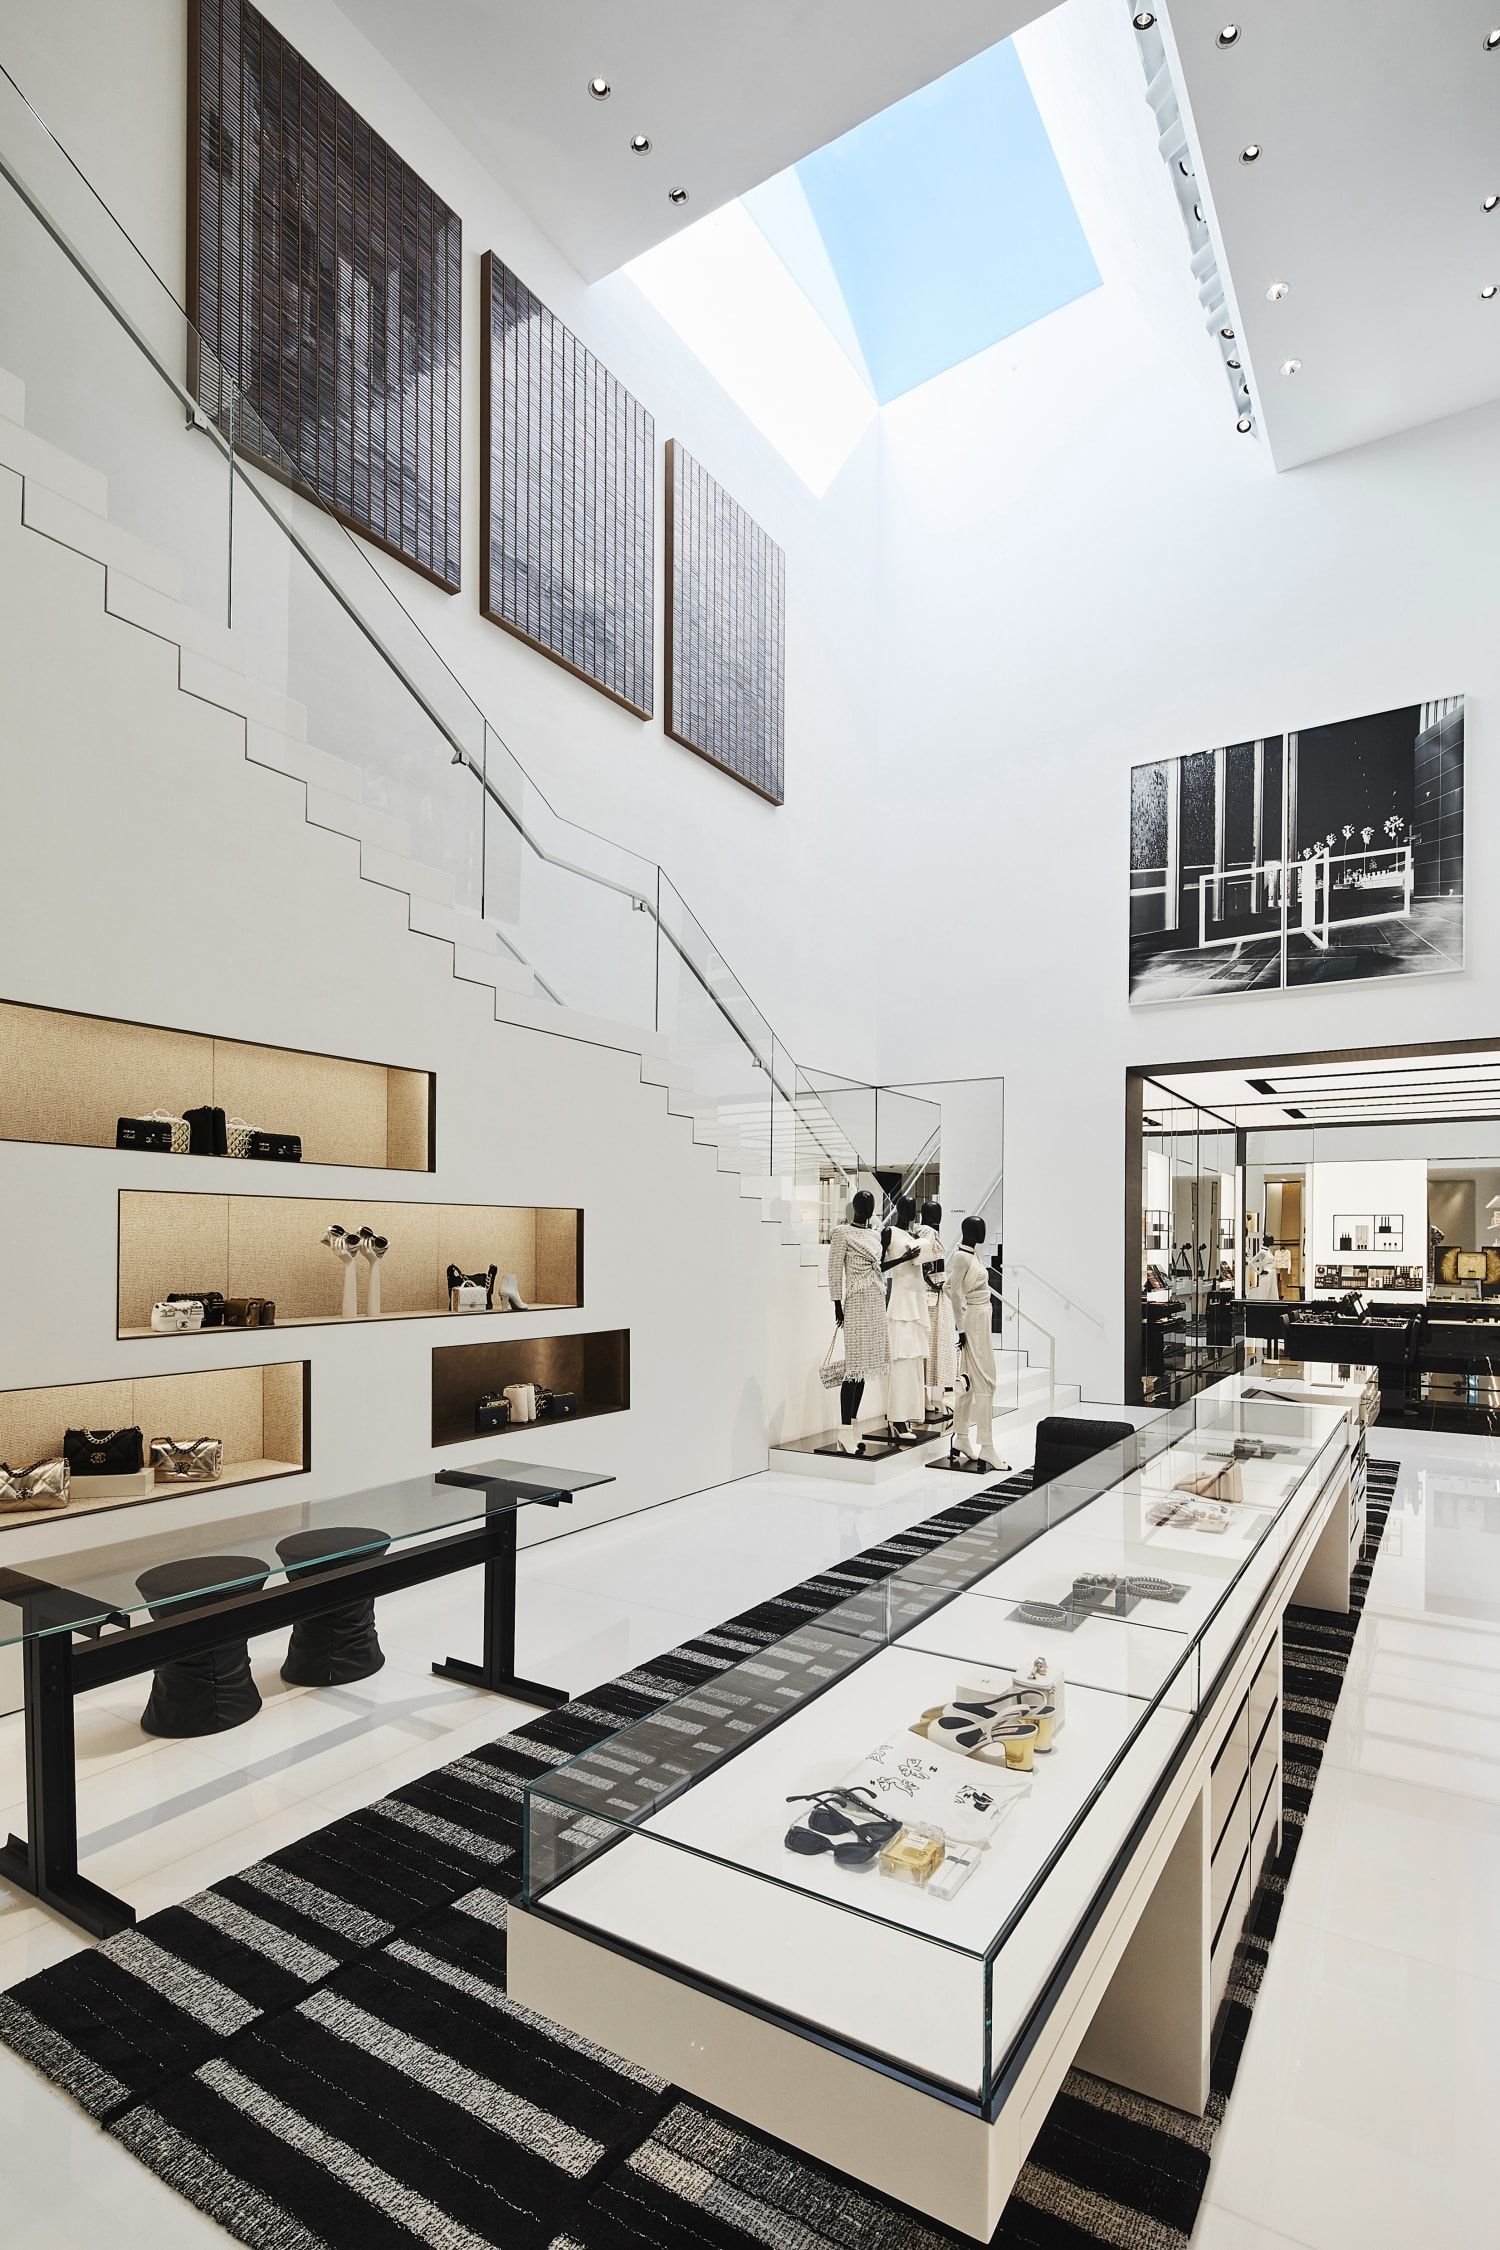 The Architecture of Chanel, Architecture, Store